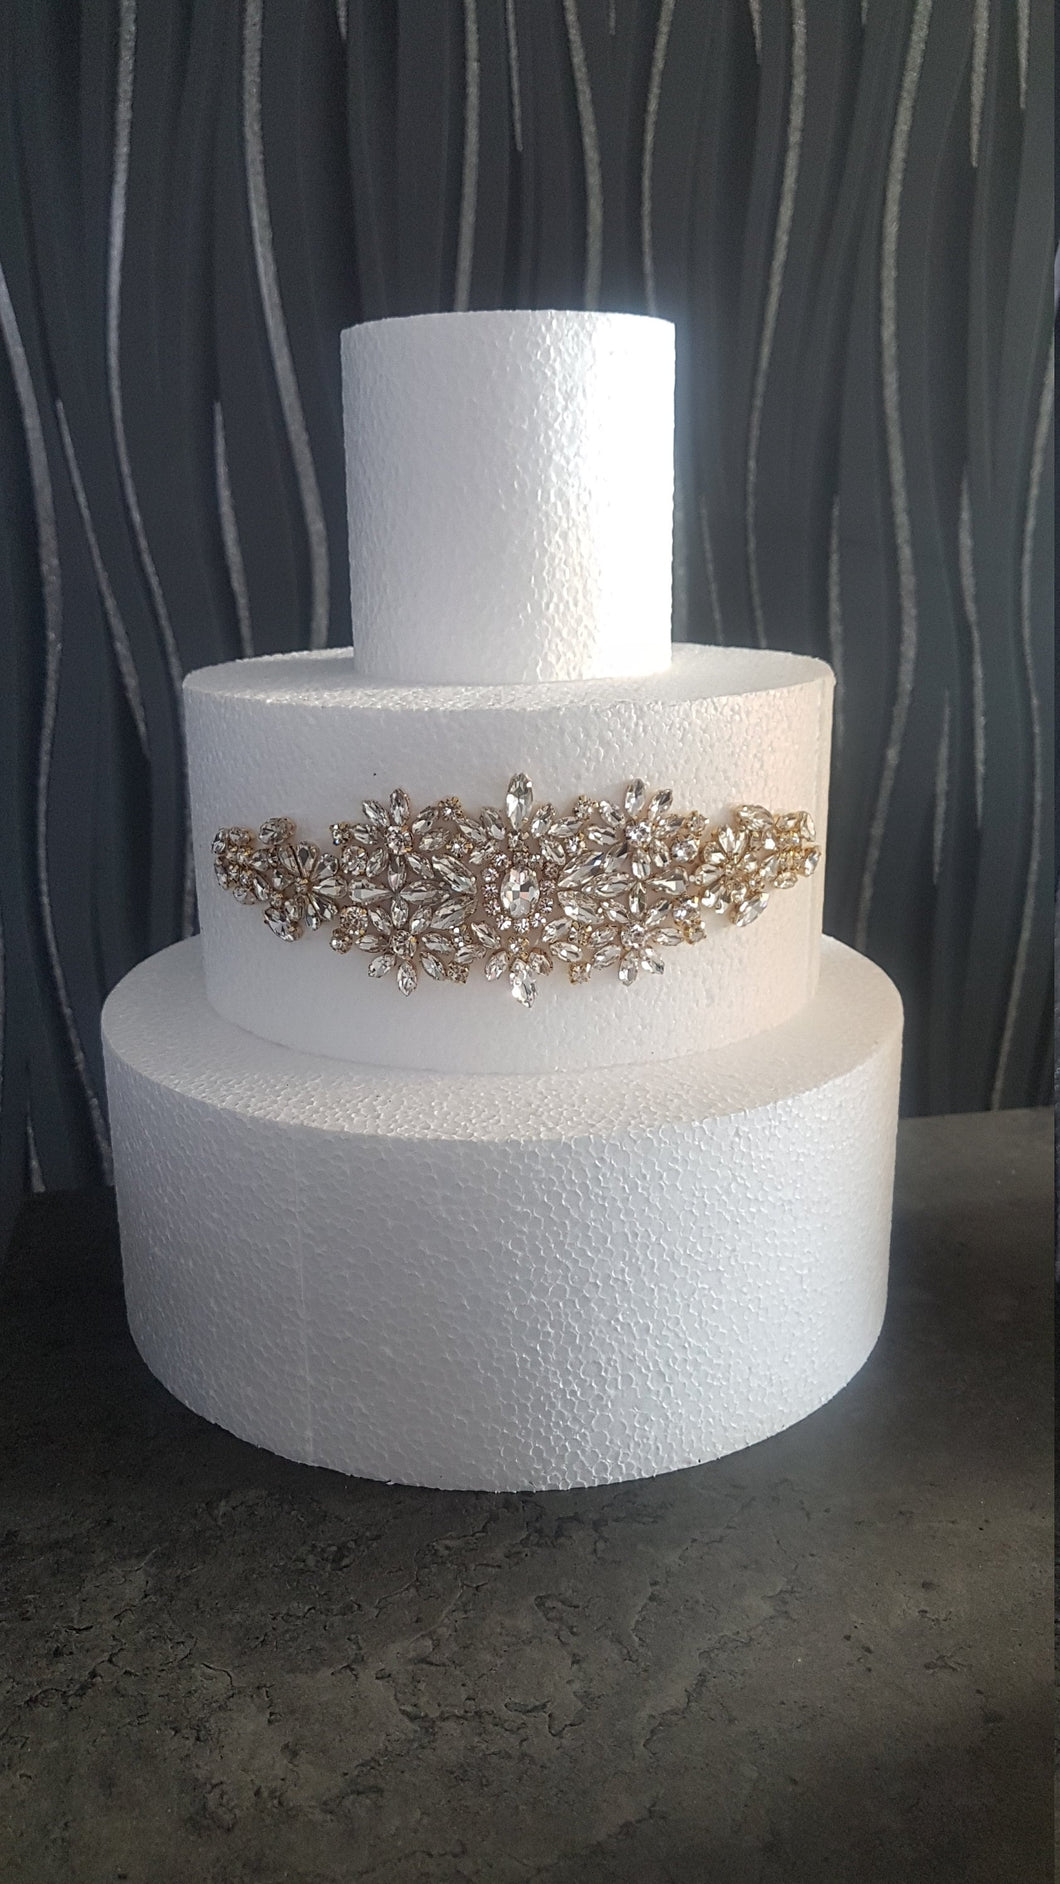 Cake brooch, crystal rhinestone cake decoration - Silver, Gold or Rose gold, FA-336 by Crystal wedding uk